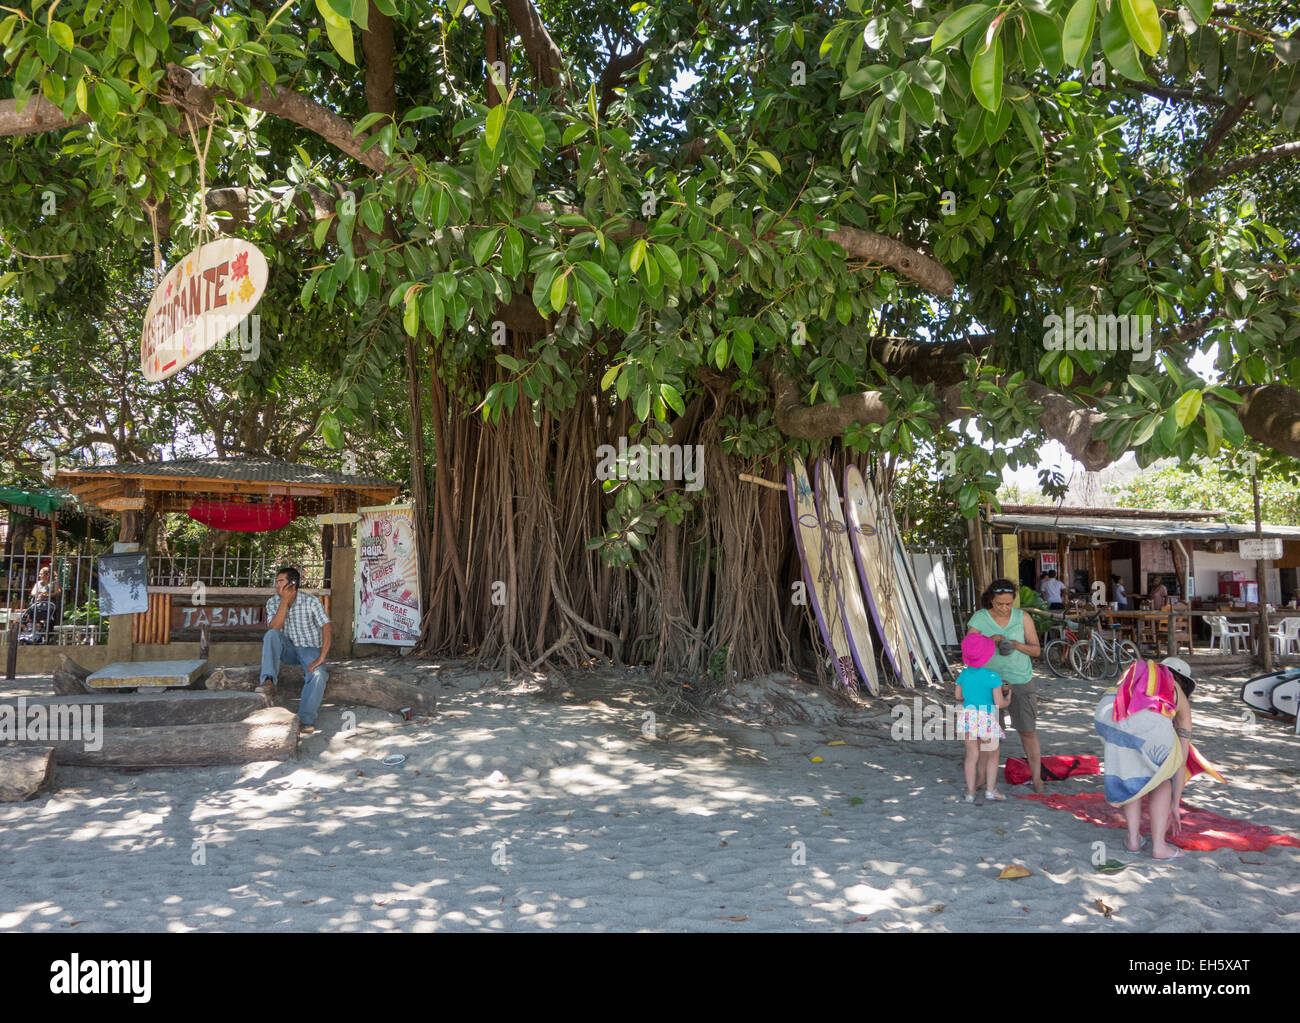 Surfboard rental business at the base of a strangler fig tree in Playa Samara, Costa Rica. Stock Photo